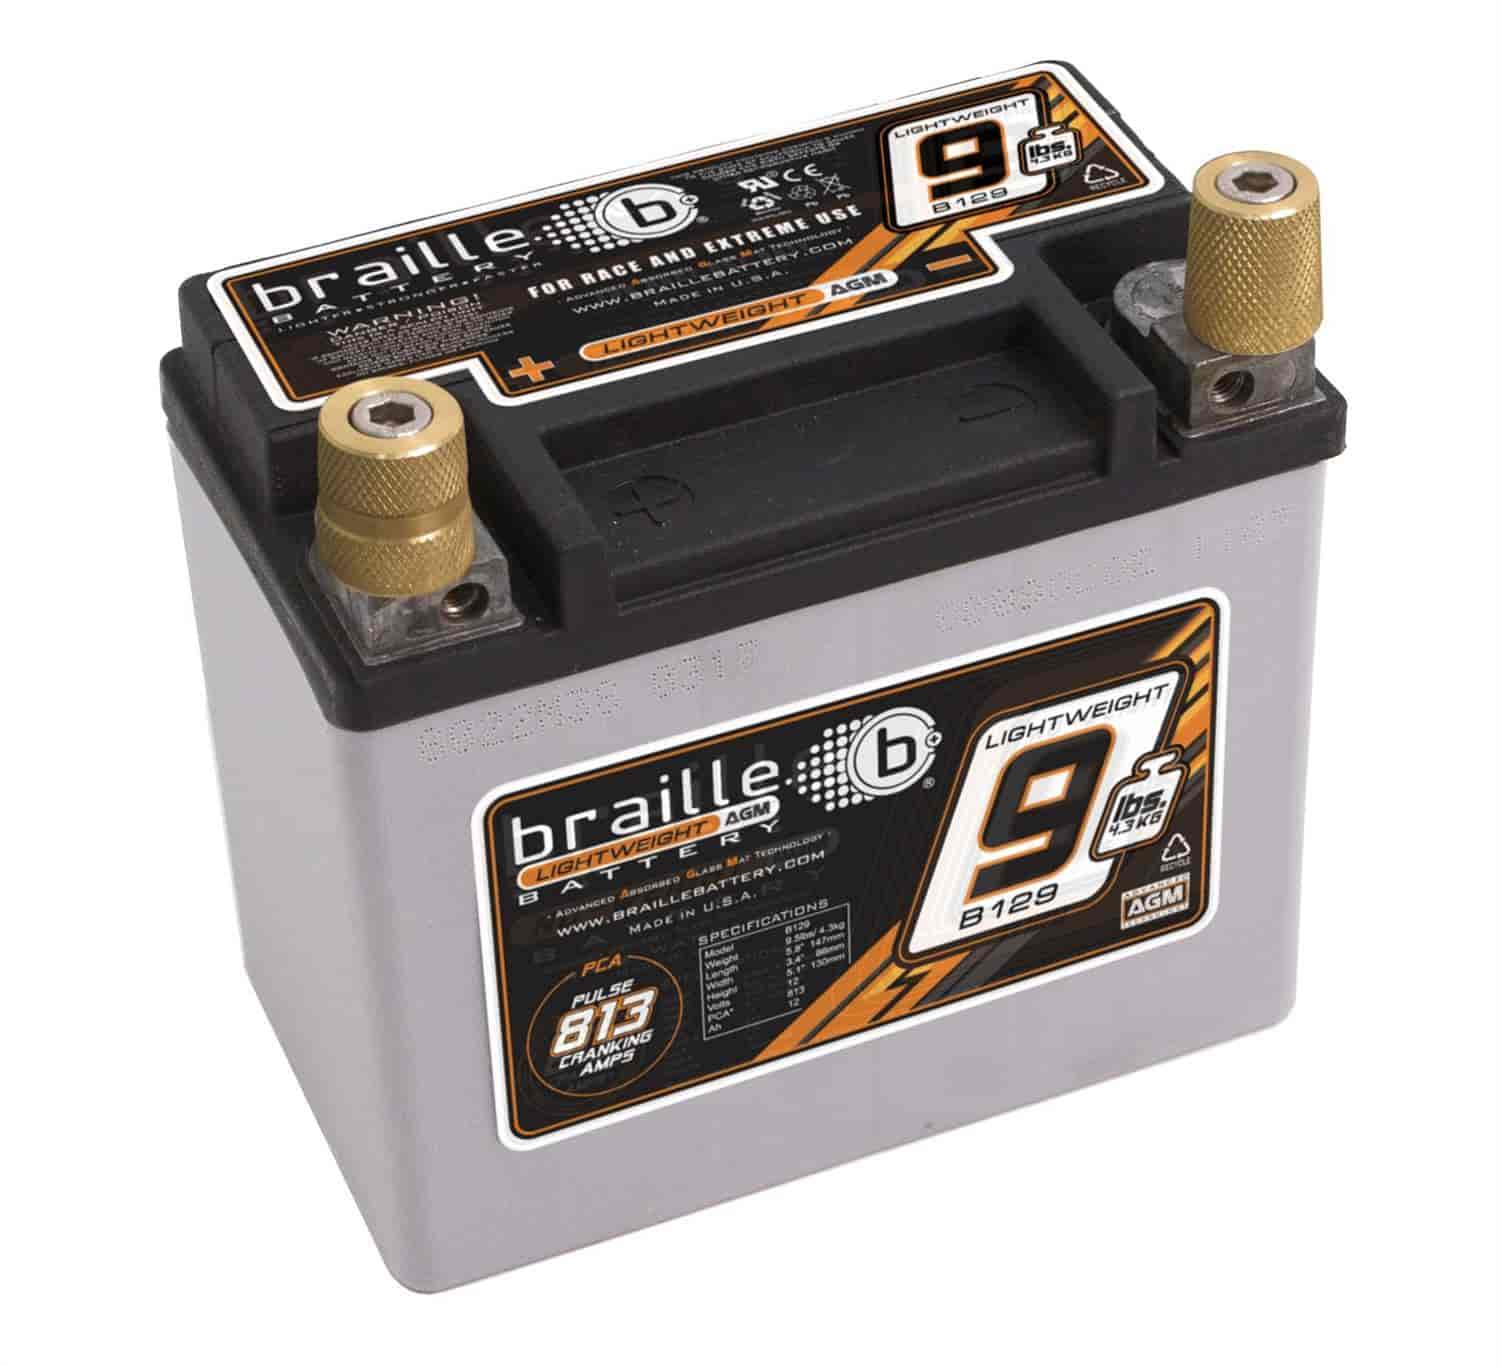 Advanced AGM Lightweight Racing Battery 9.5 lbs